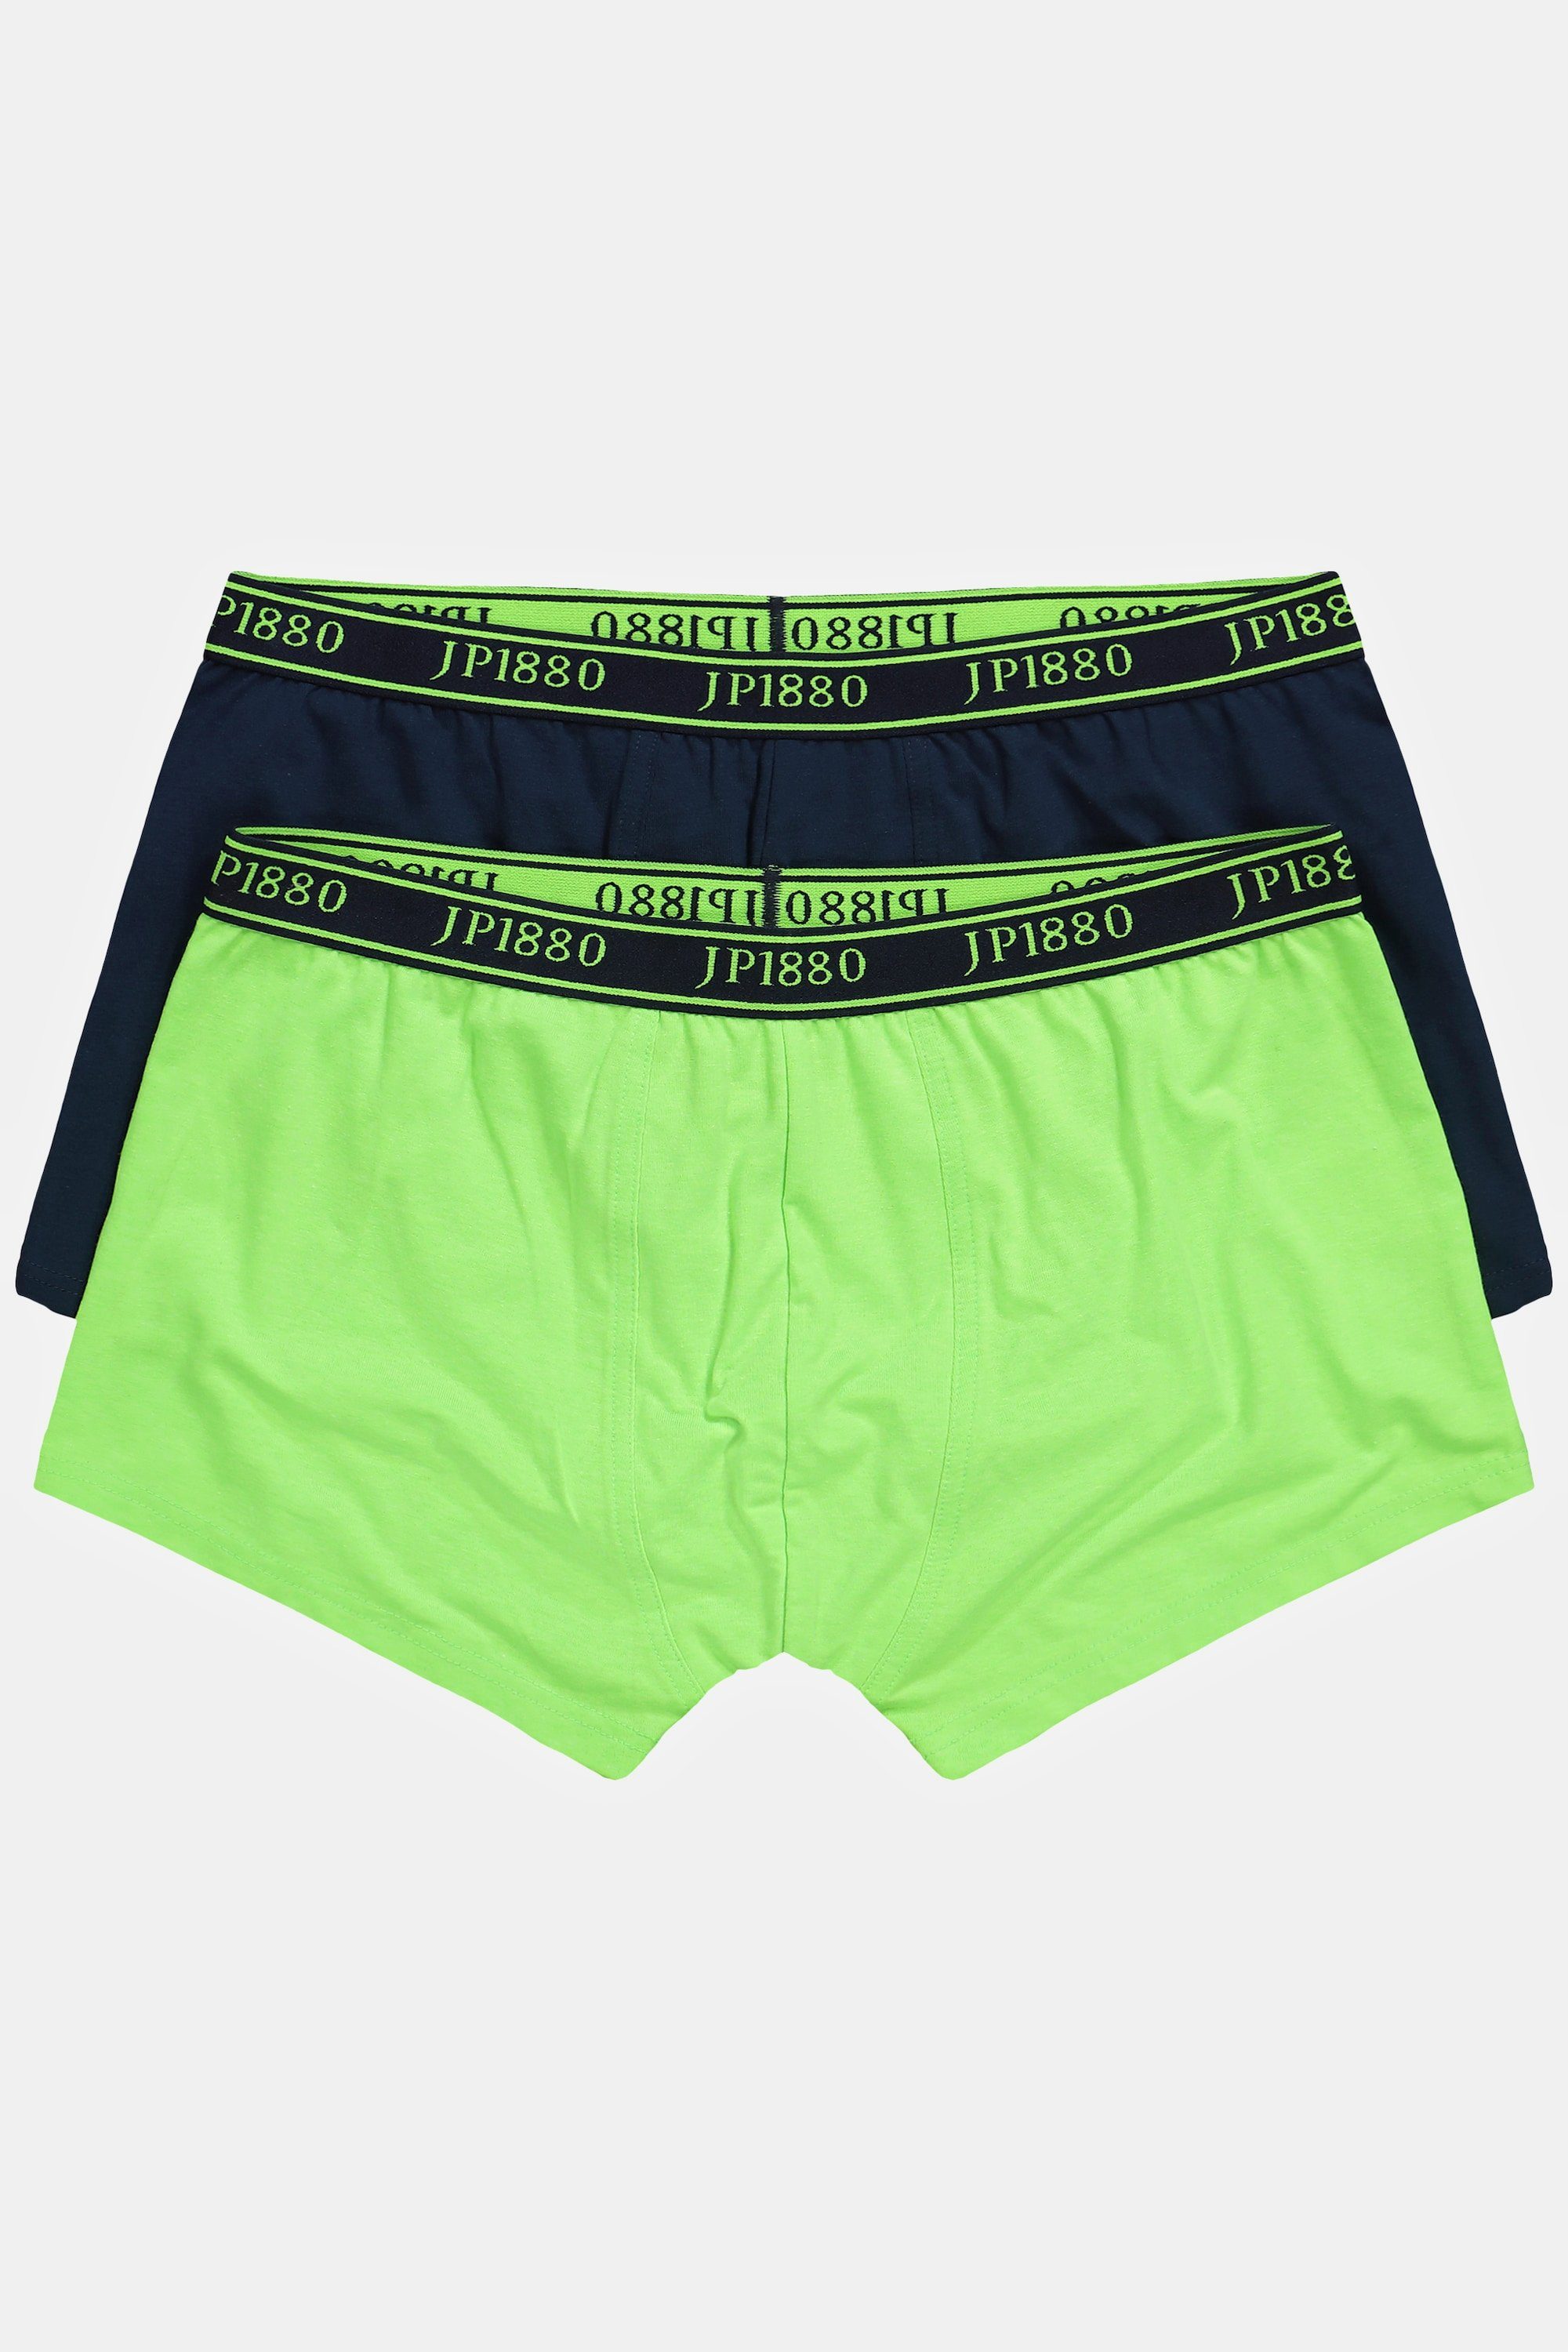 Unterhose Hip-Pants FLEXNAMIC® JP1880 Boxershorts 2er-Pack